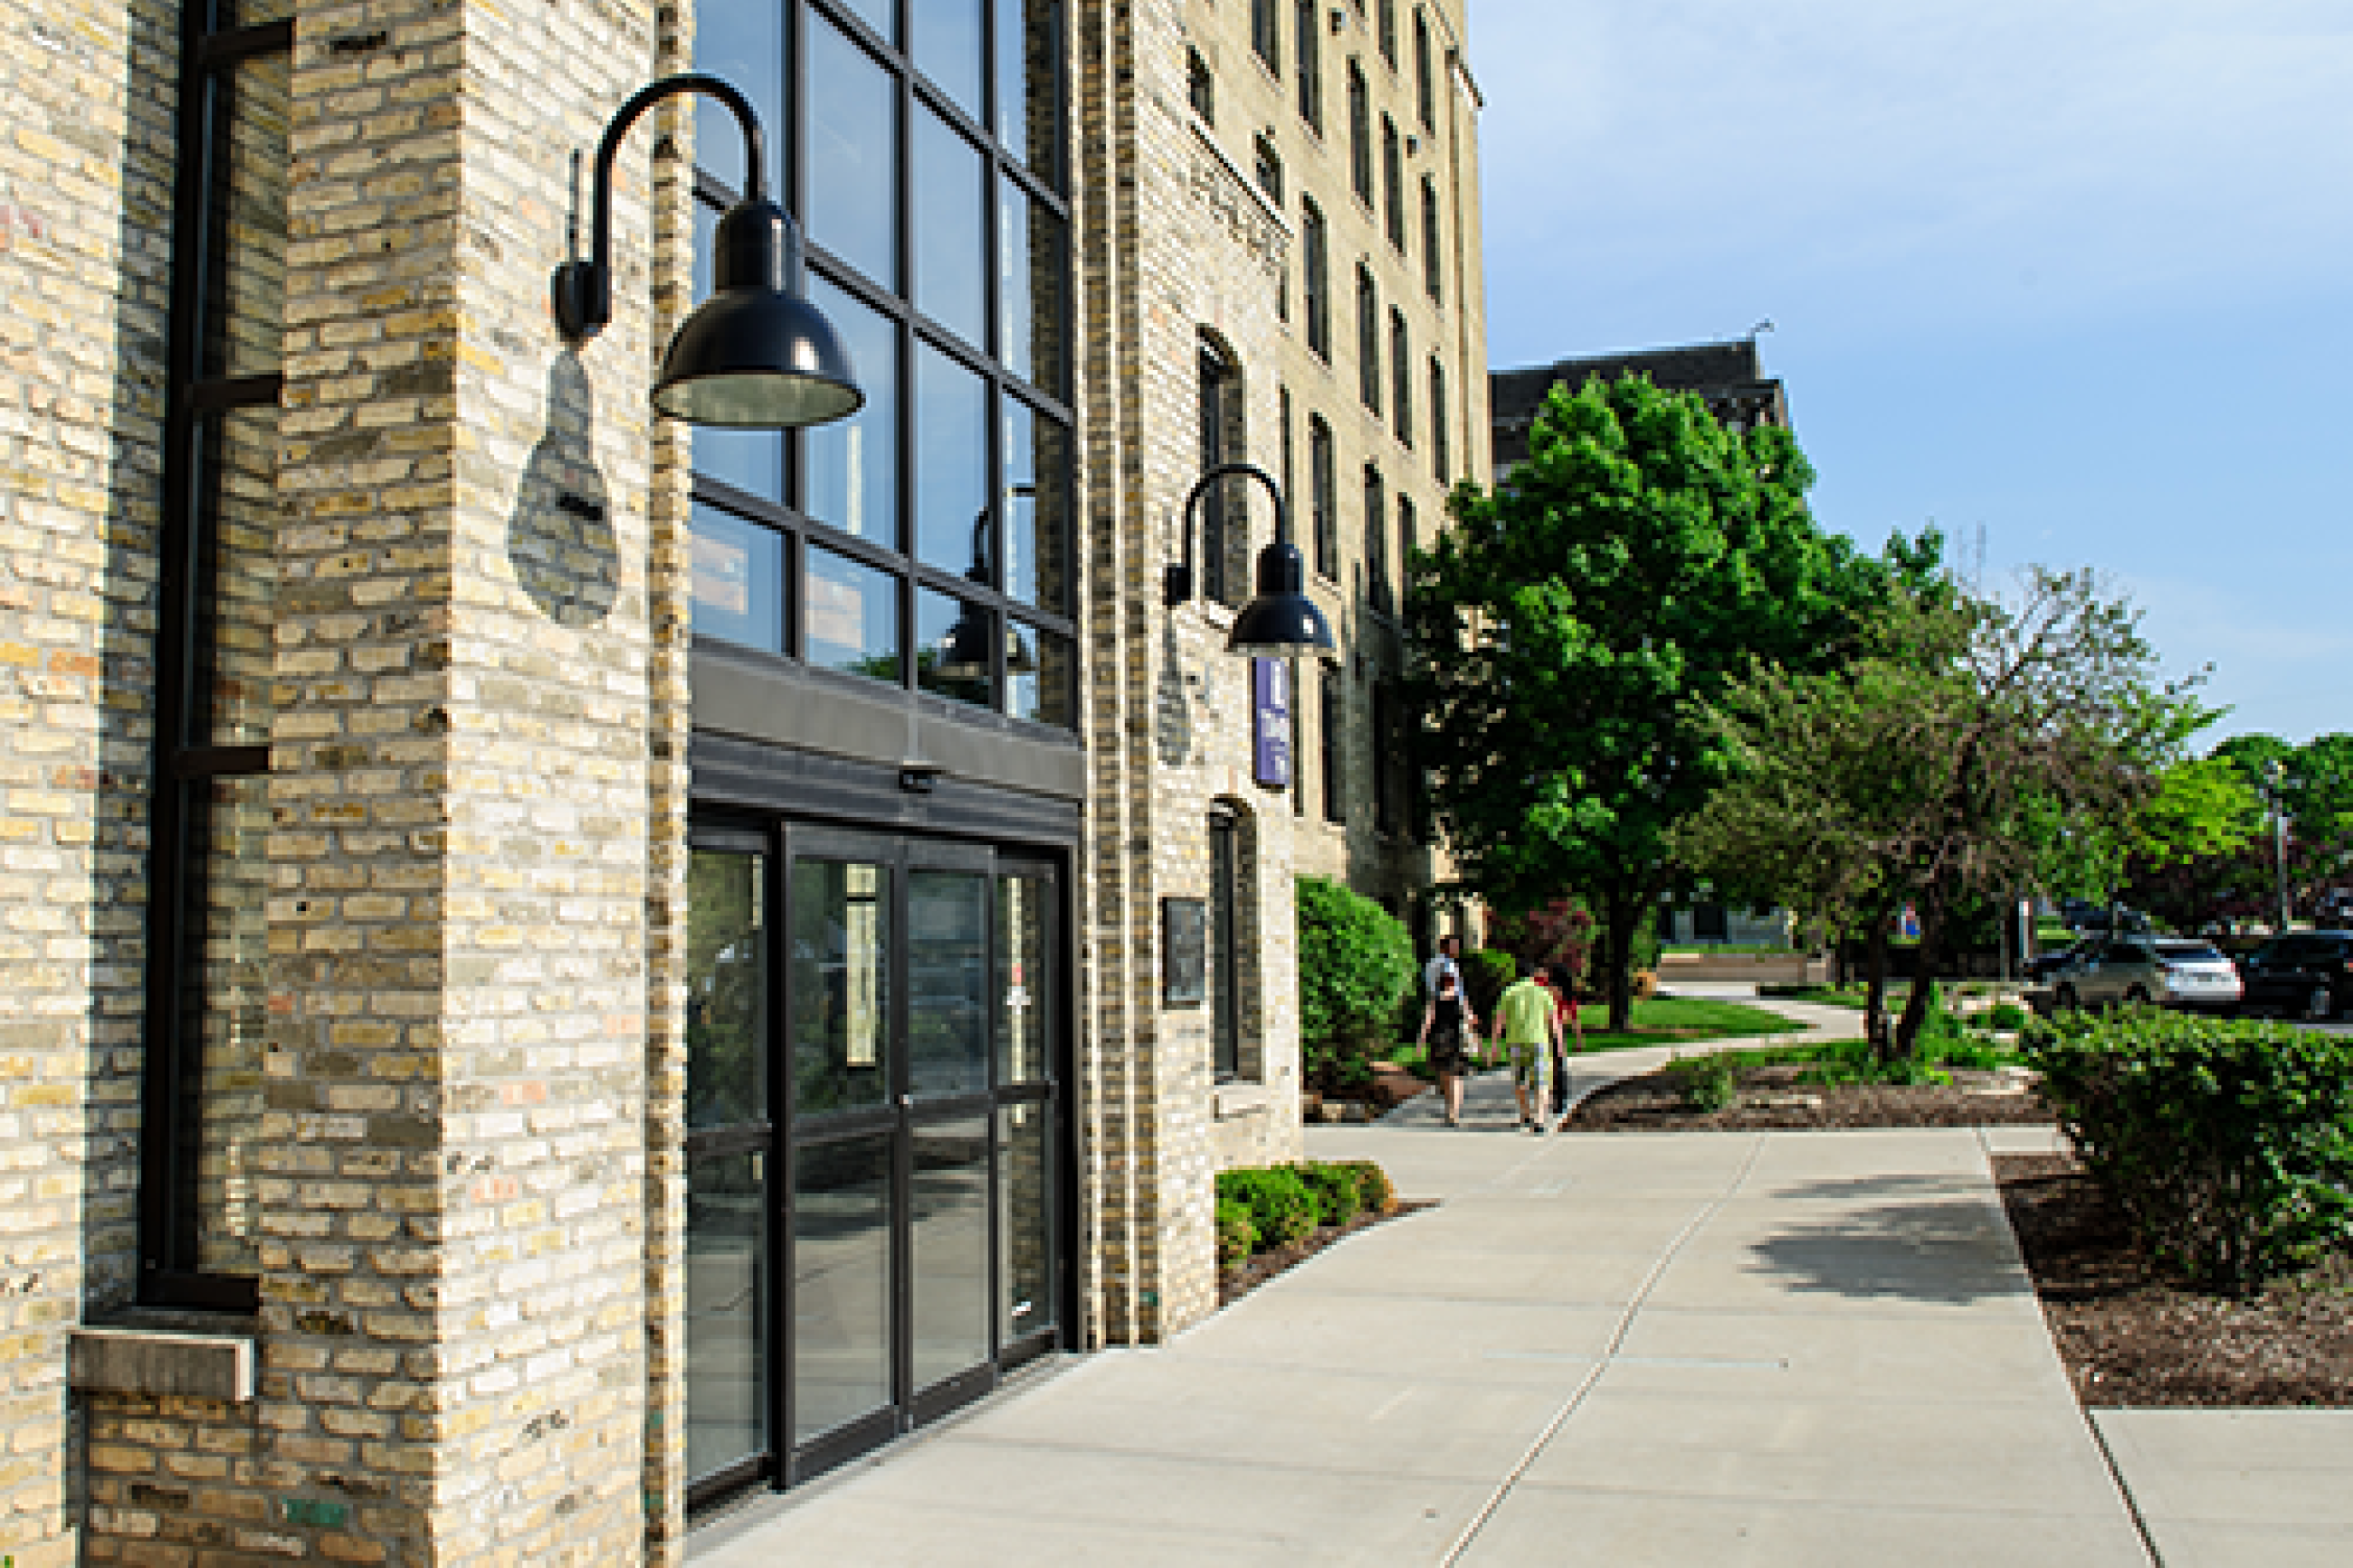 Main entrance to Milwaukee campus